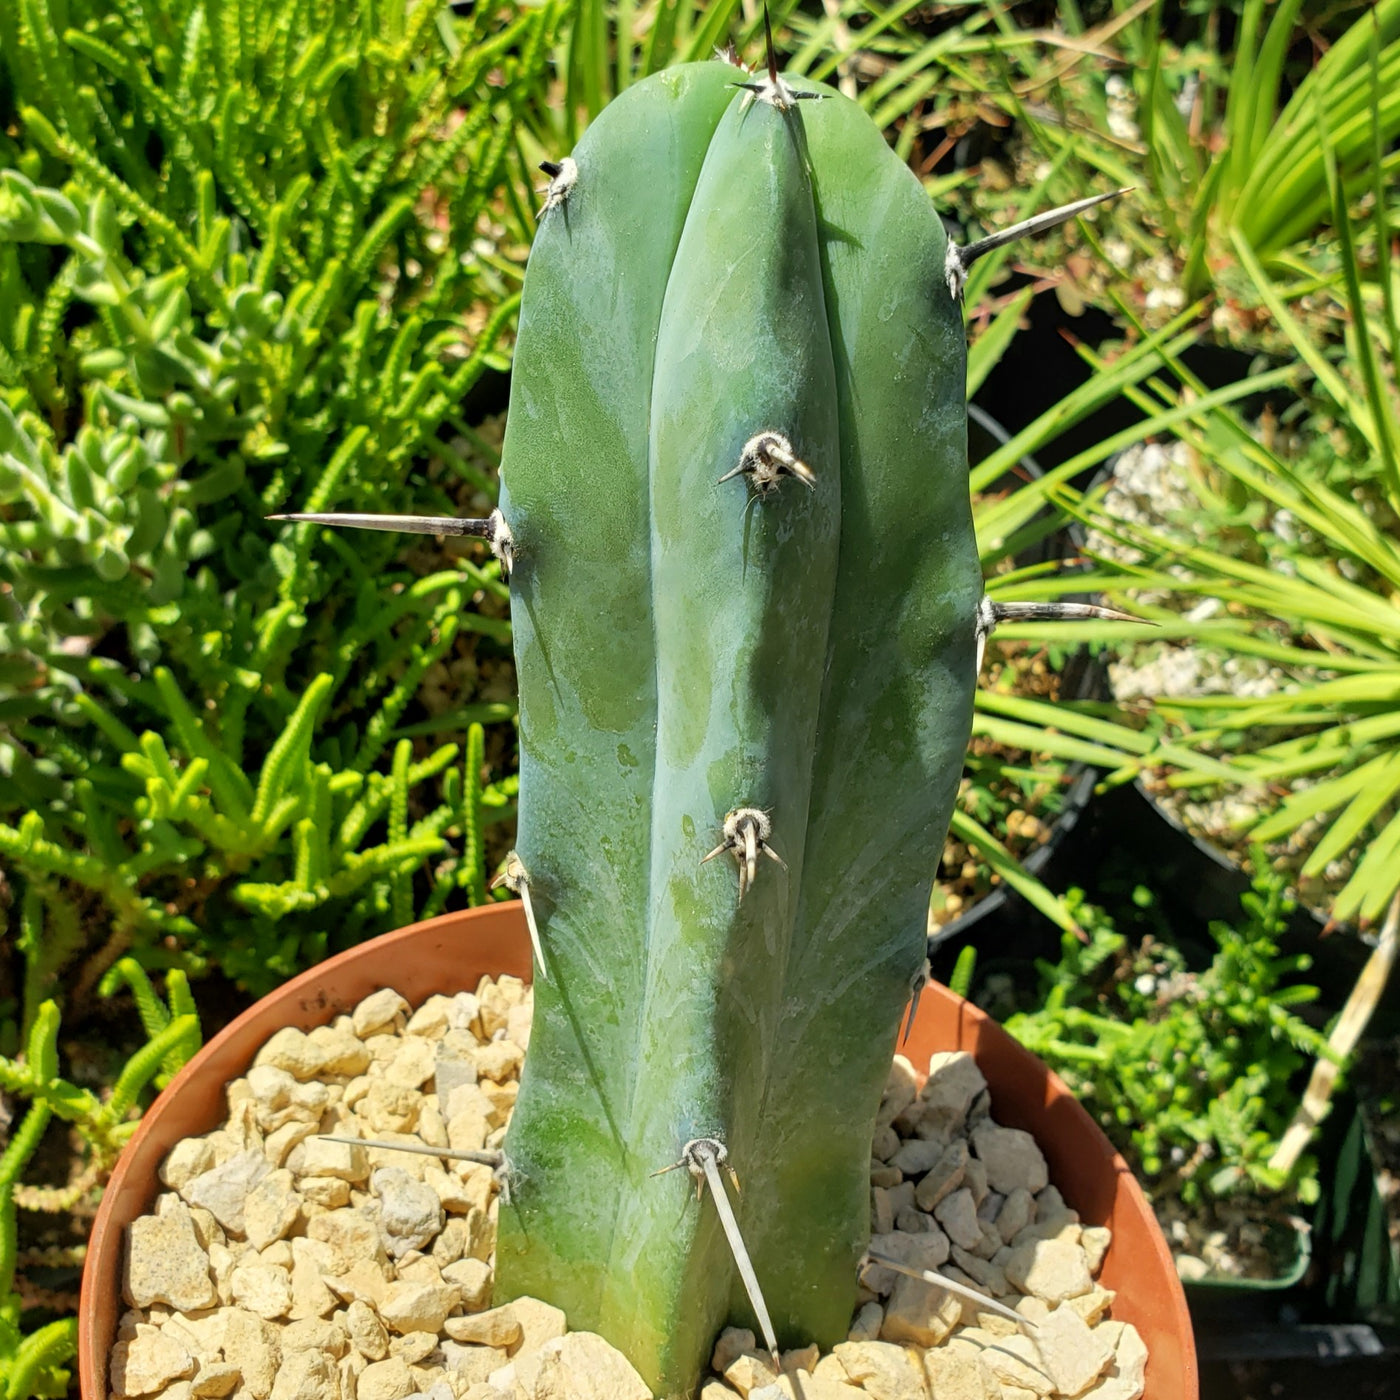 Blue Myrtle Cactus - Myrtillocactus geometrizans